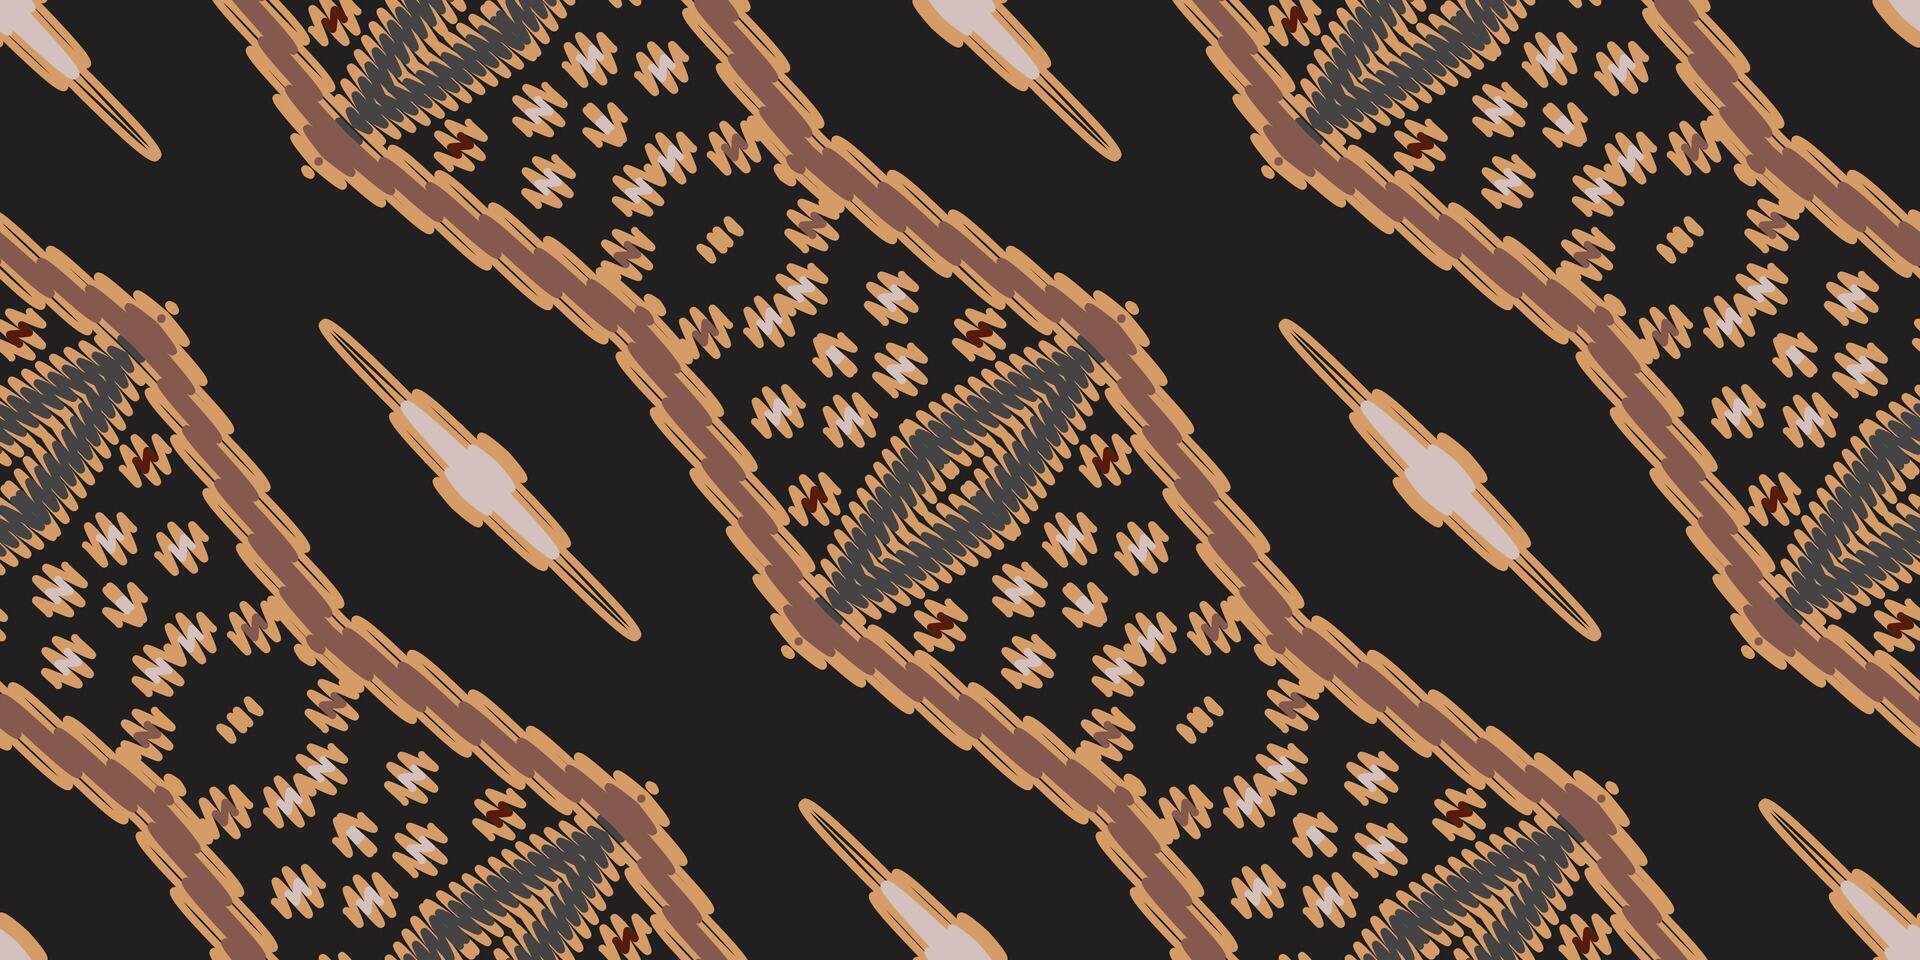 barroco modelo sin costura australiano aborigen modelo motivo bordado, ikat bordado vector diseño para impresión tapiz floral kimono repetir modelo cordones Español motivo